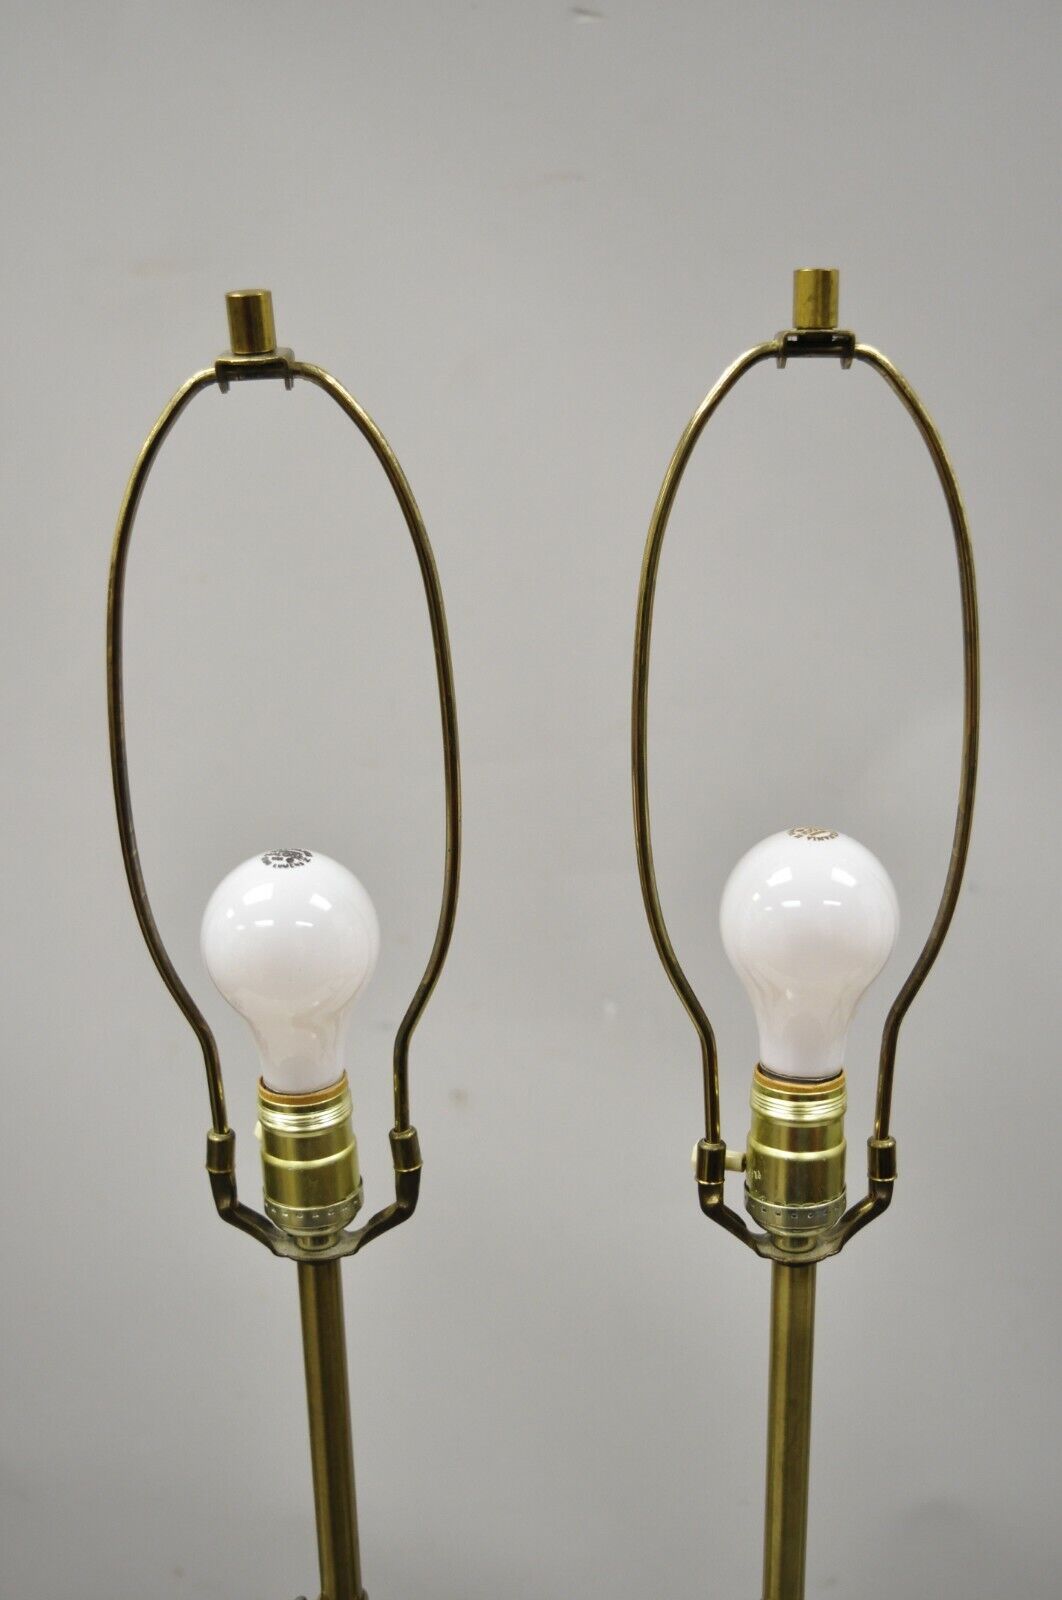 Laurel Mid Century Brutalist Modernist Brass Sculptural Table Lamps - a Pair